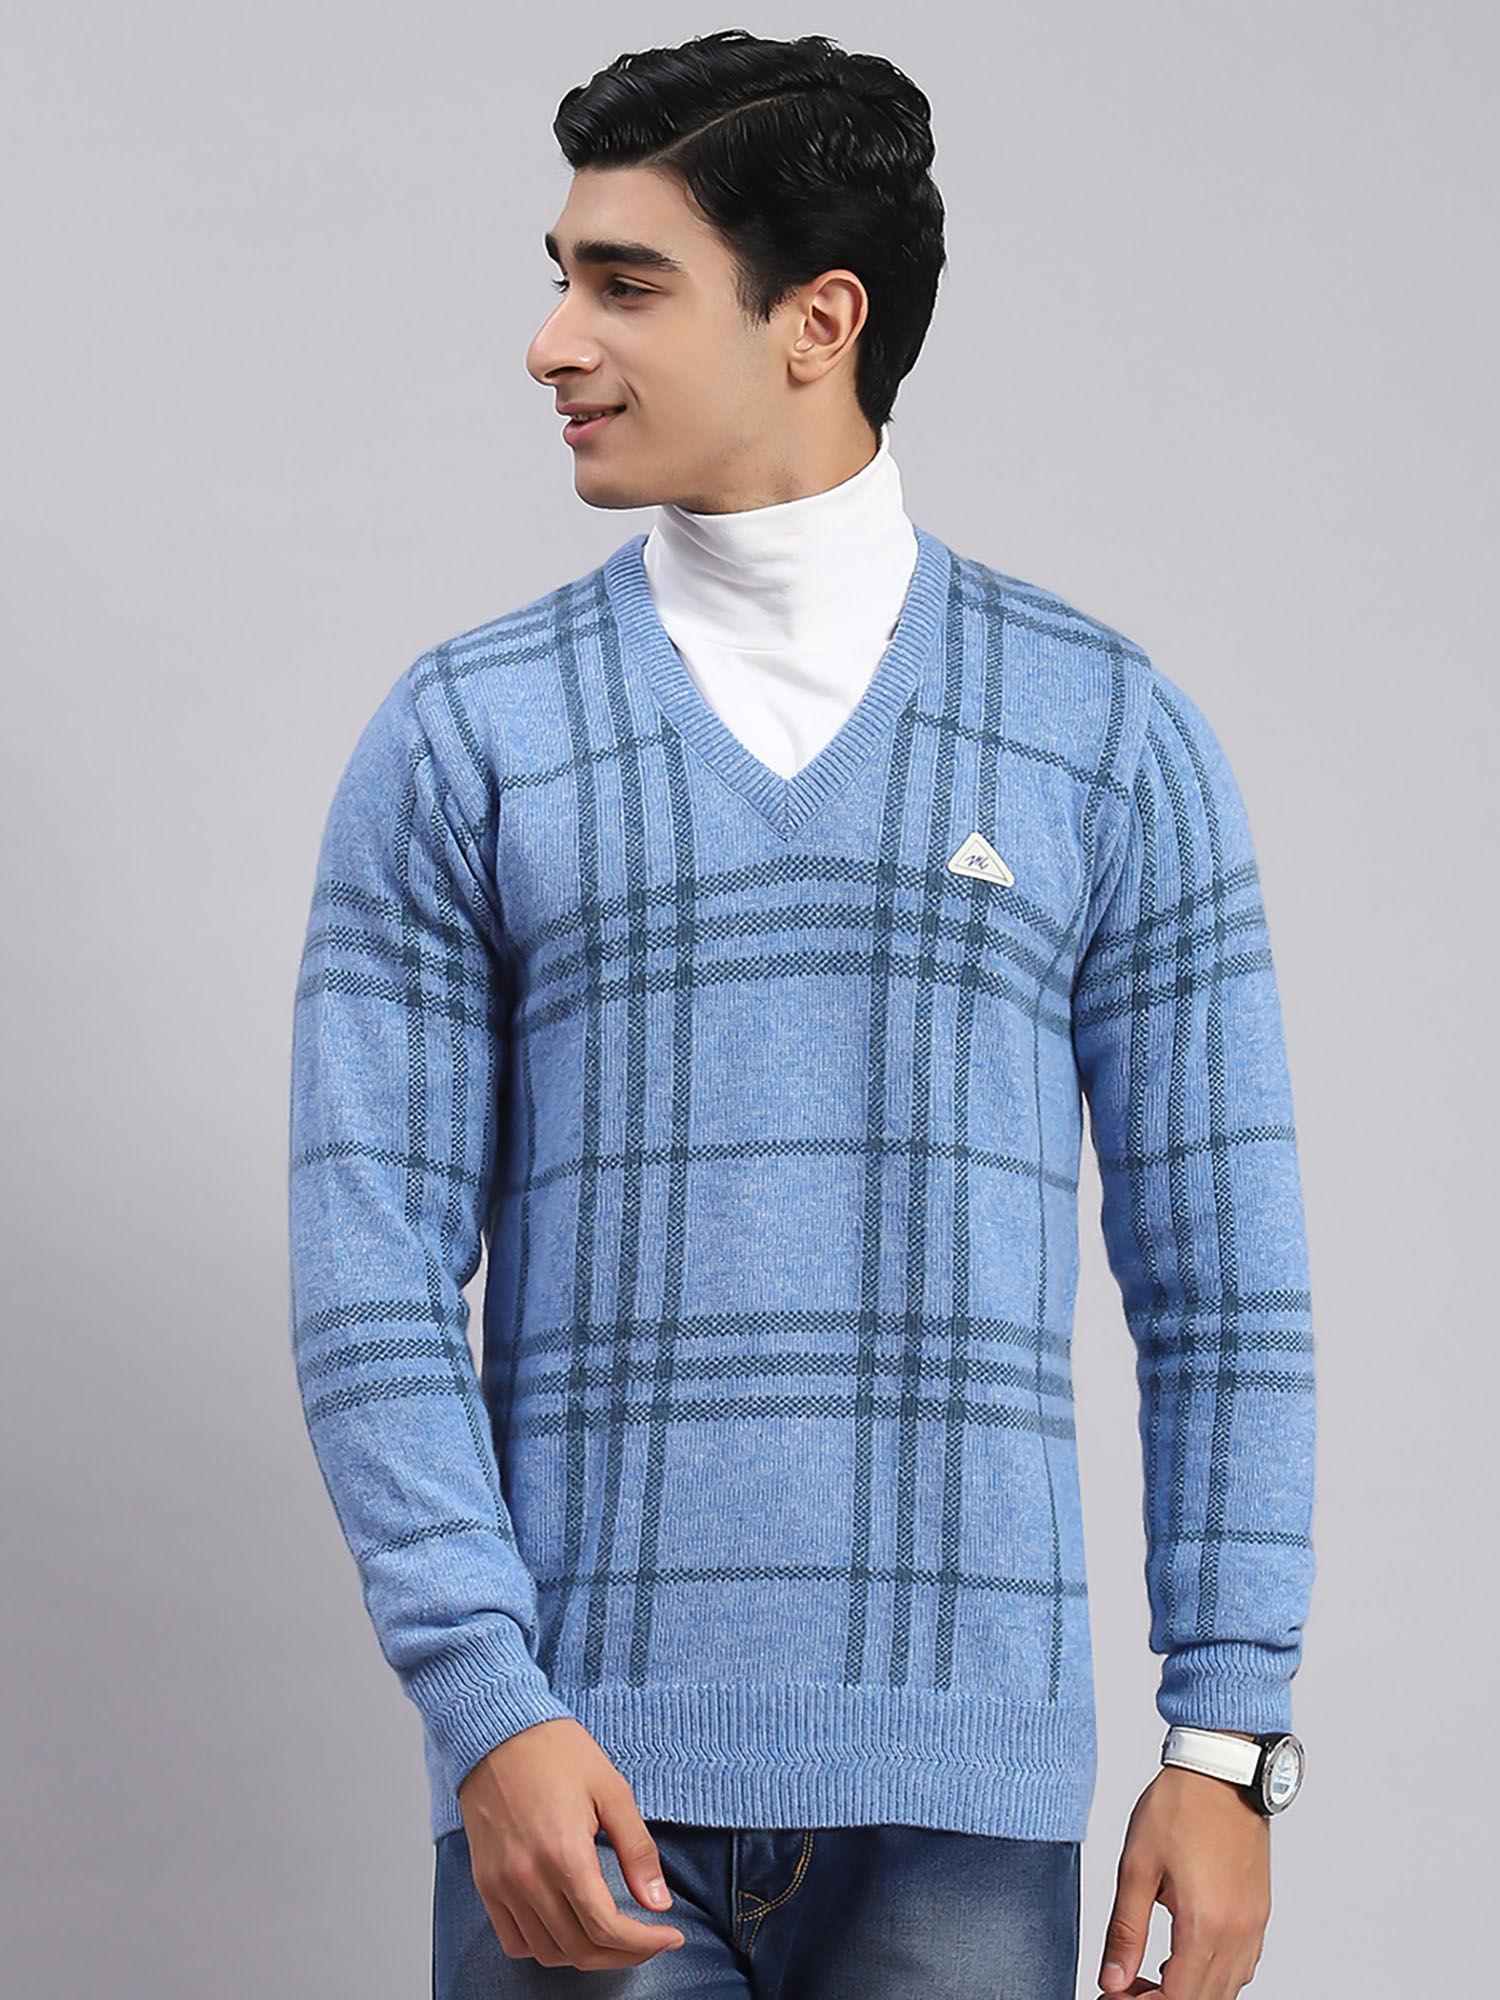 sky-mix-check-v-neck-sweater